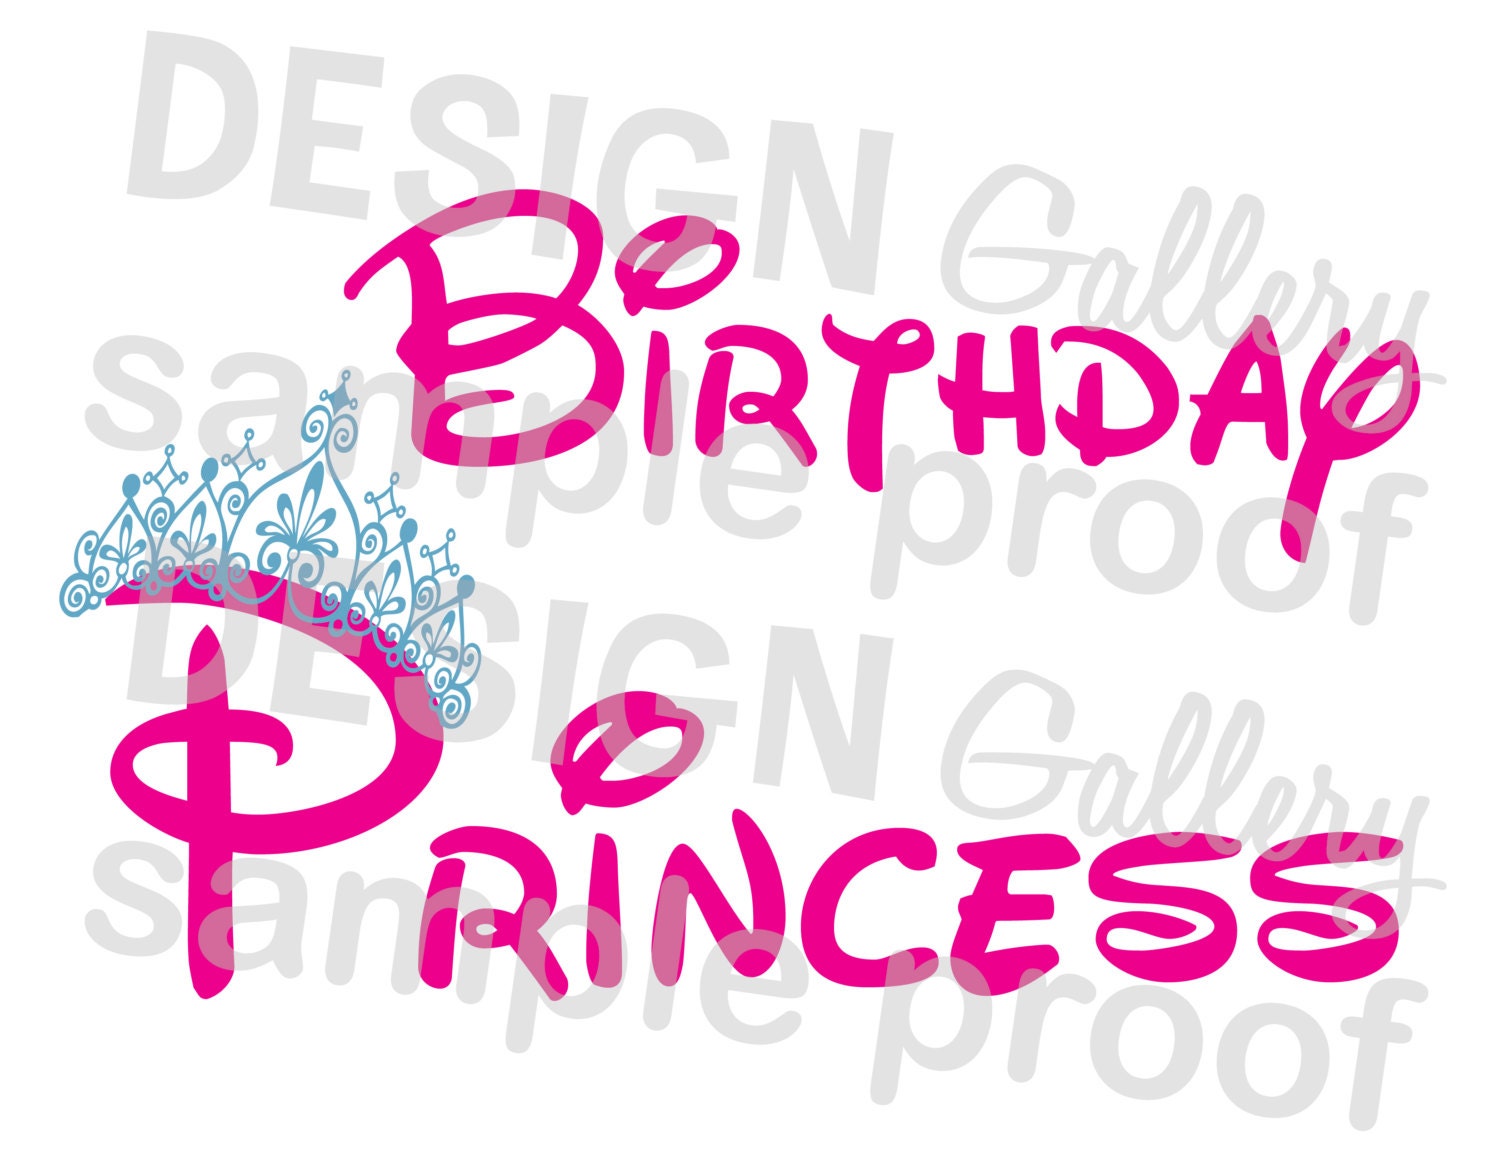 Download Birthday Princess with Crown image JPG image & SVG cut DIY